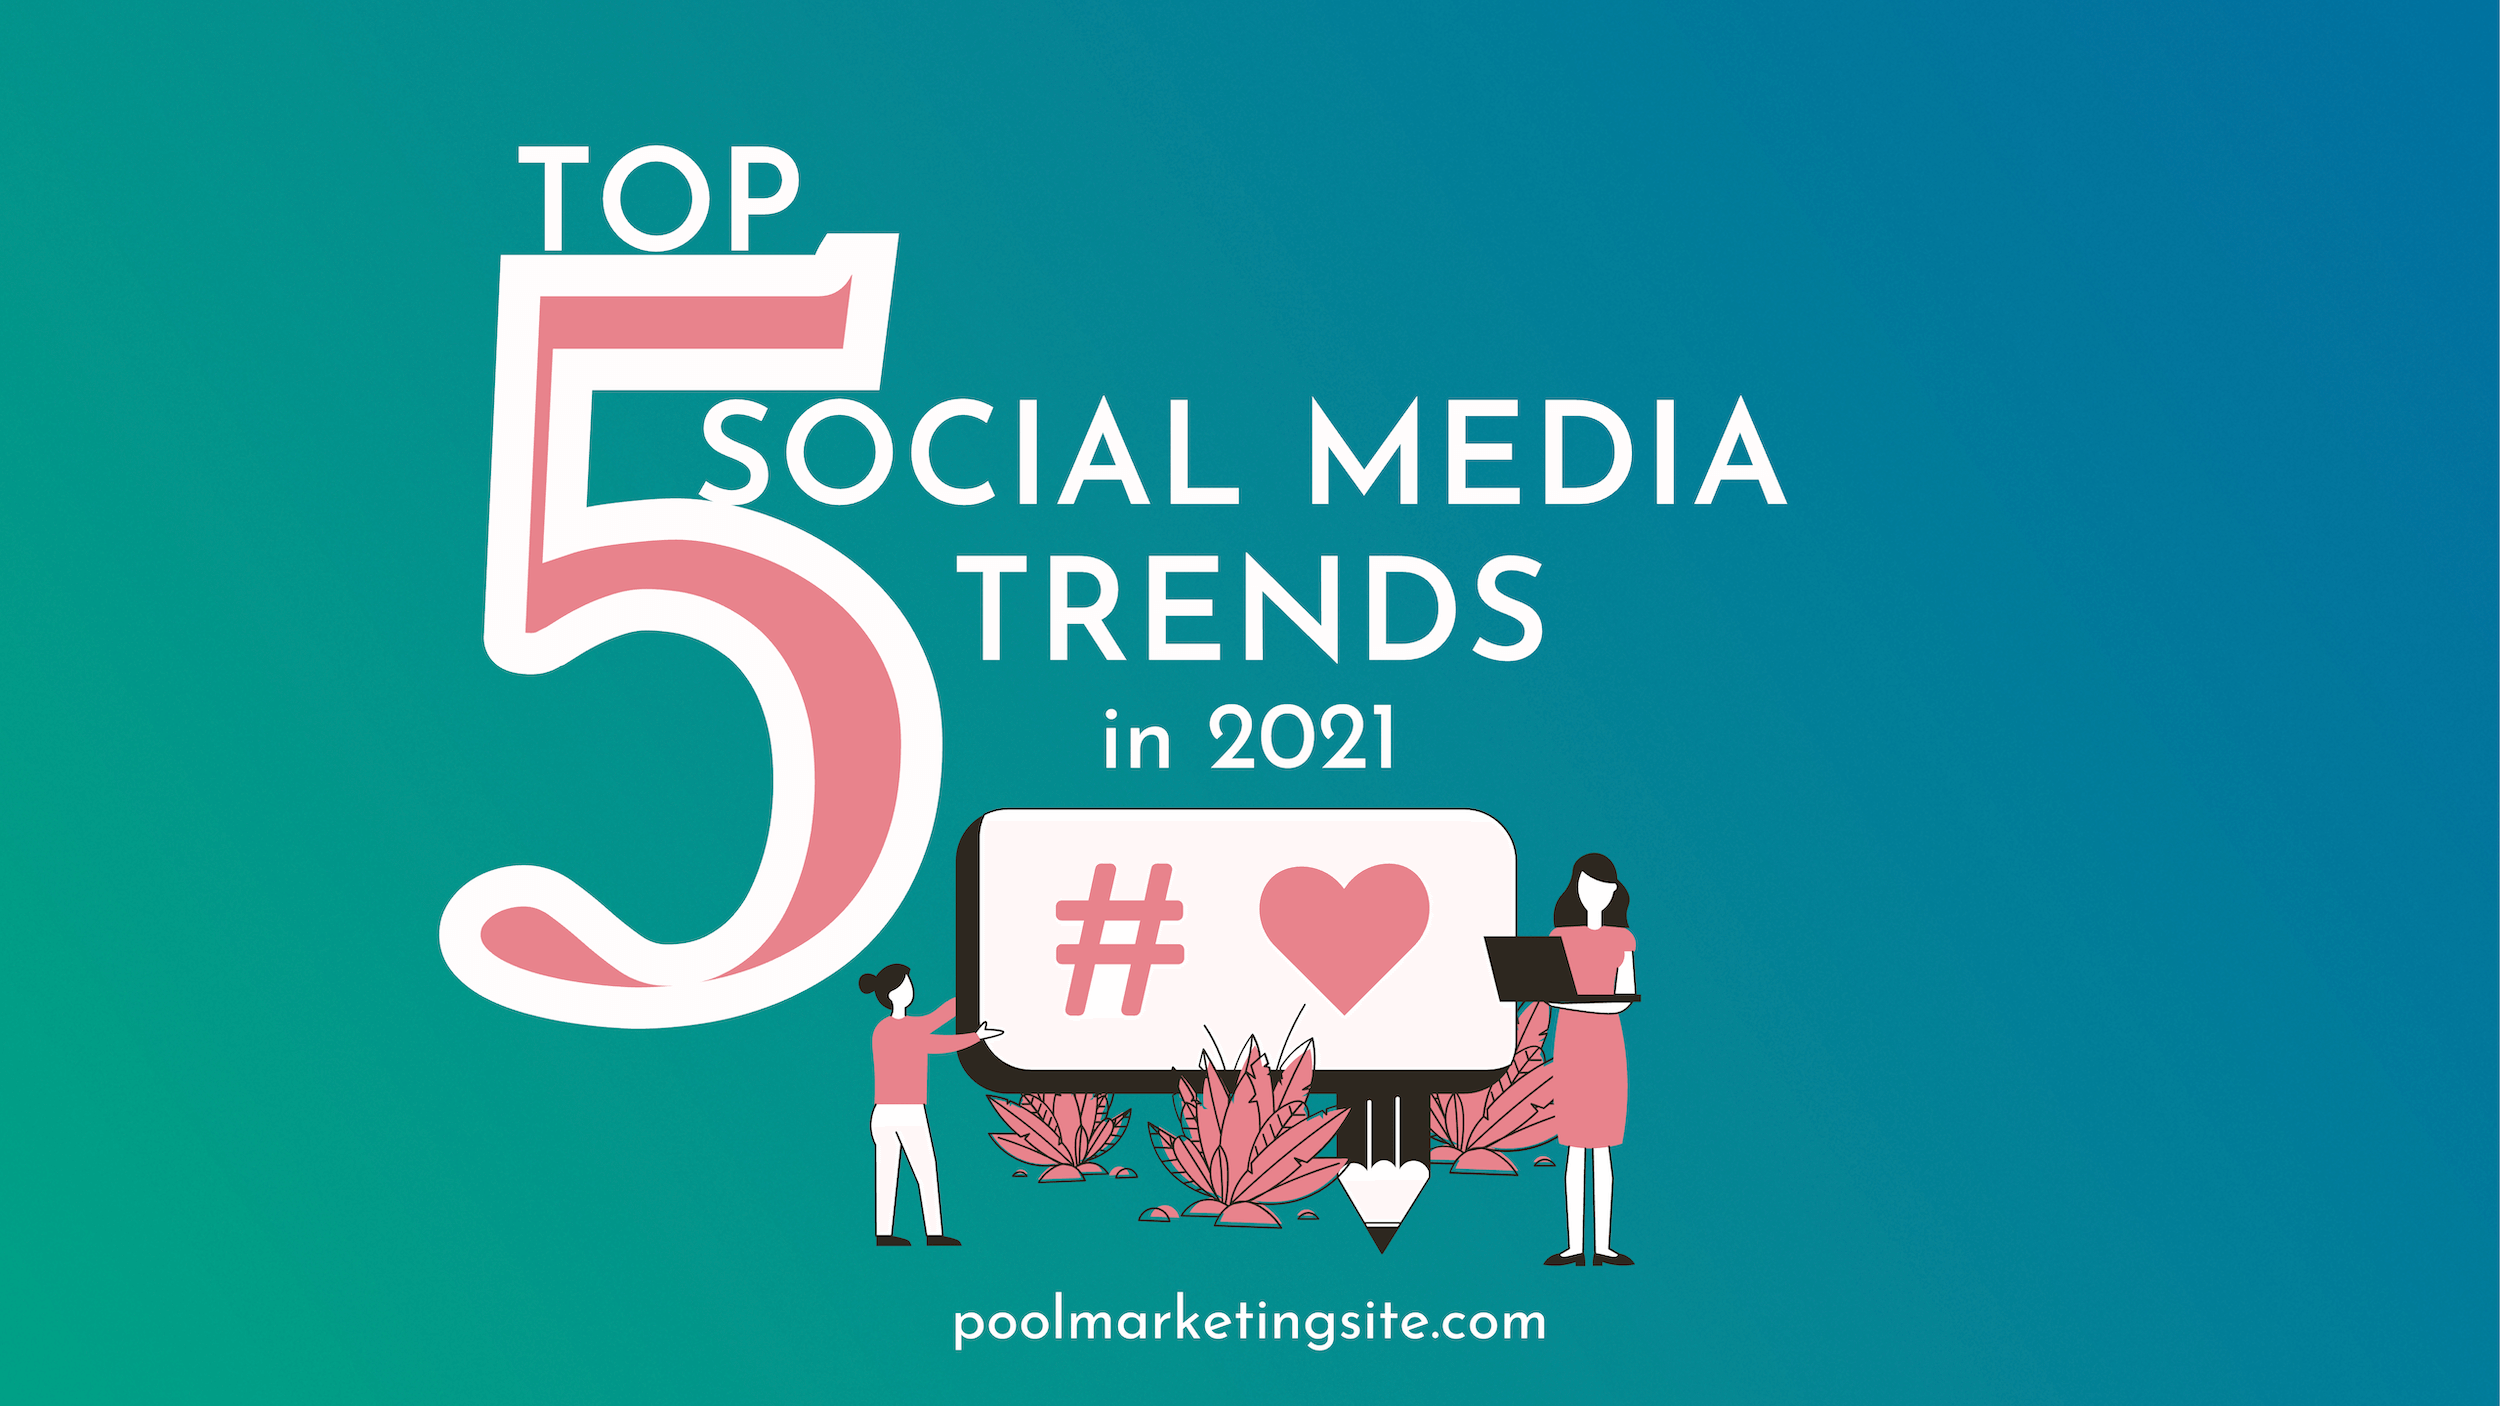 Top 5 Social Media Marketing Trends in 2021